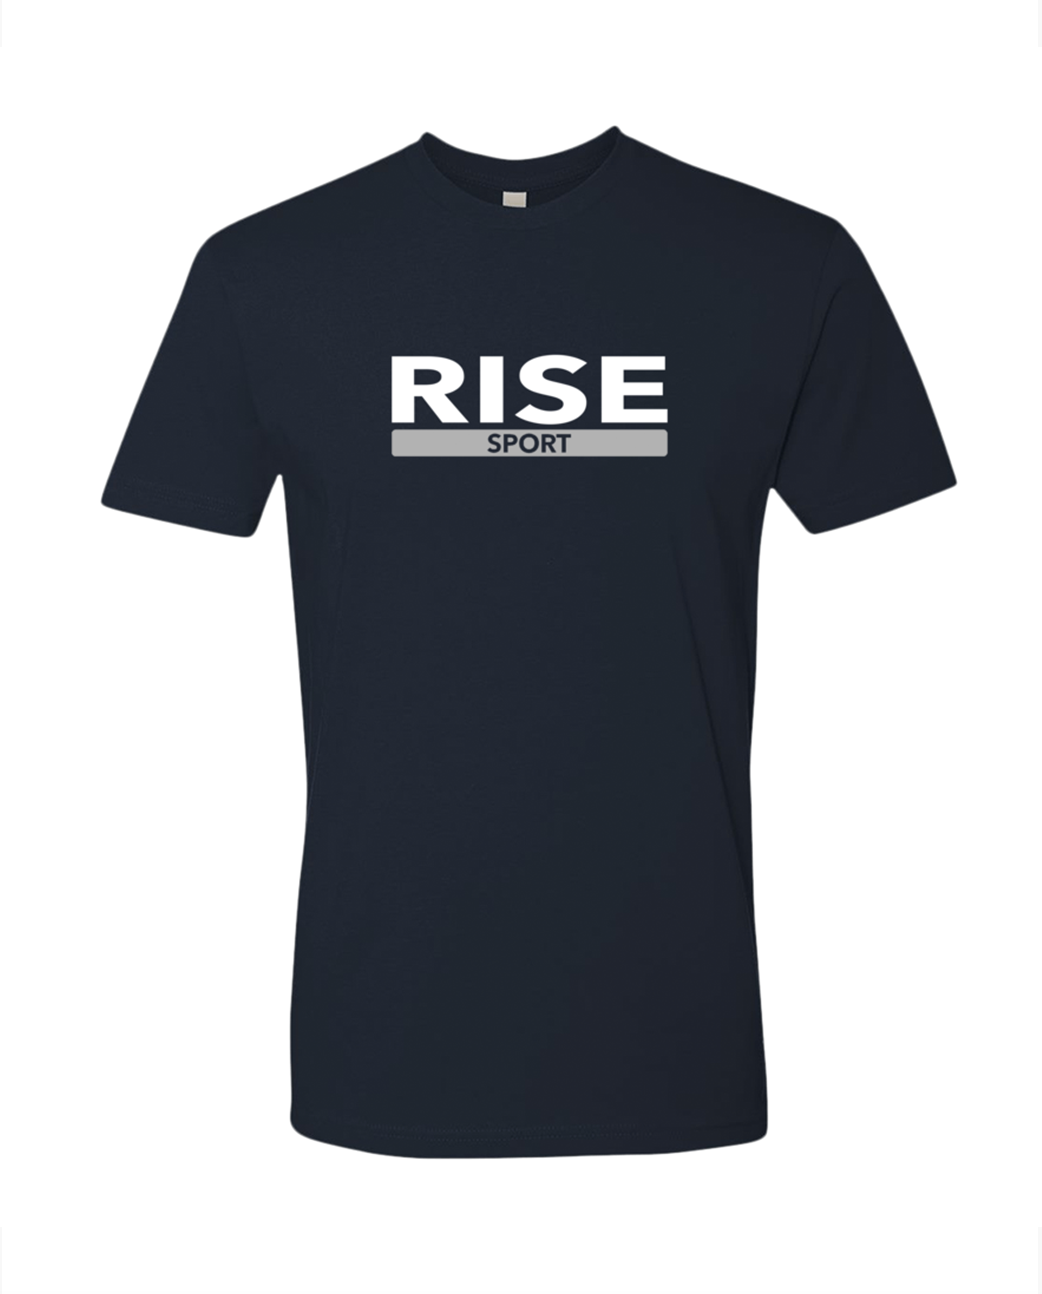 Rise Sport Signature T-shirt Tee Navy Gray